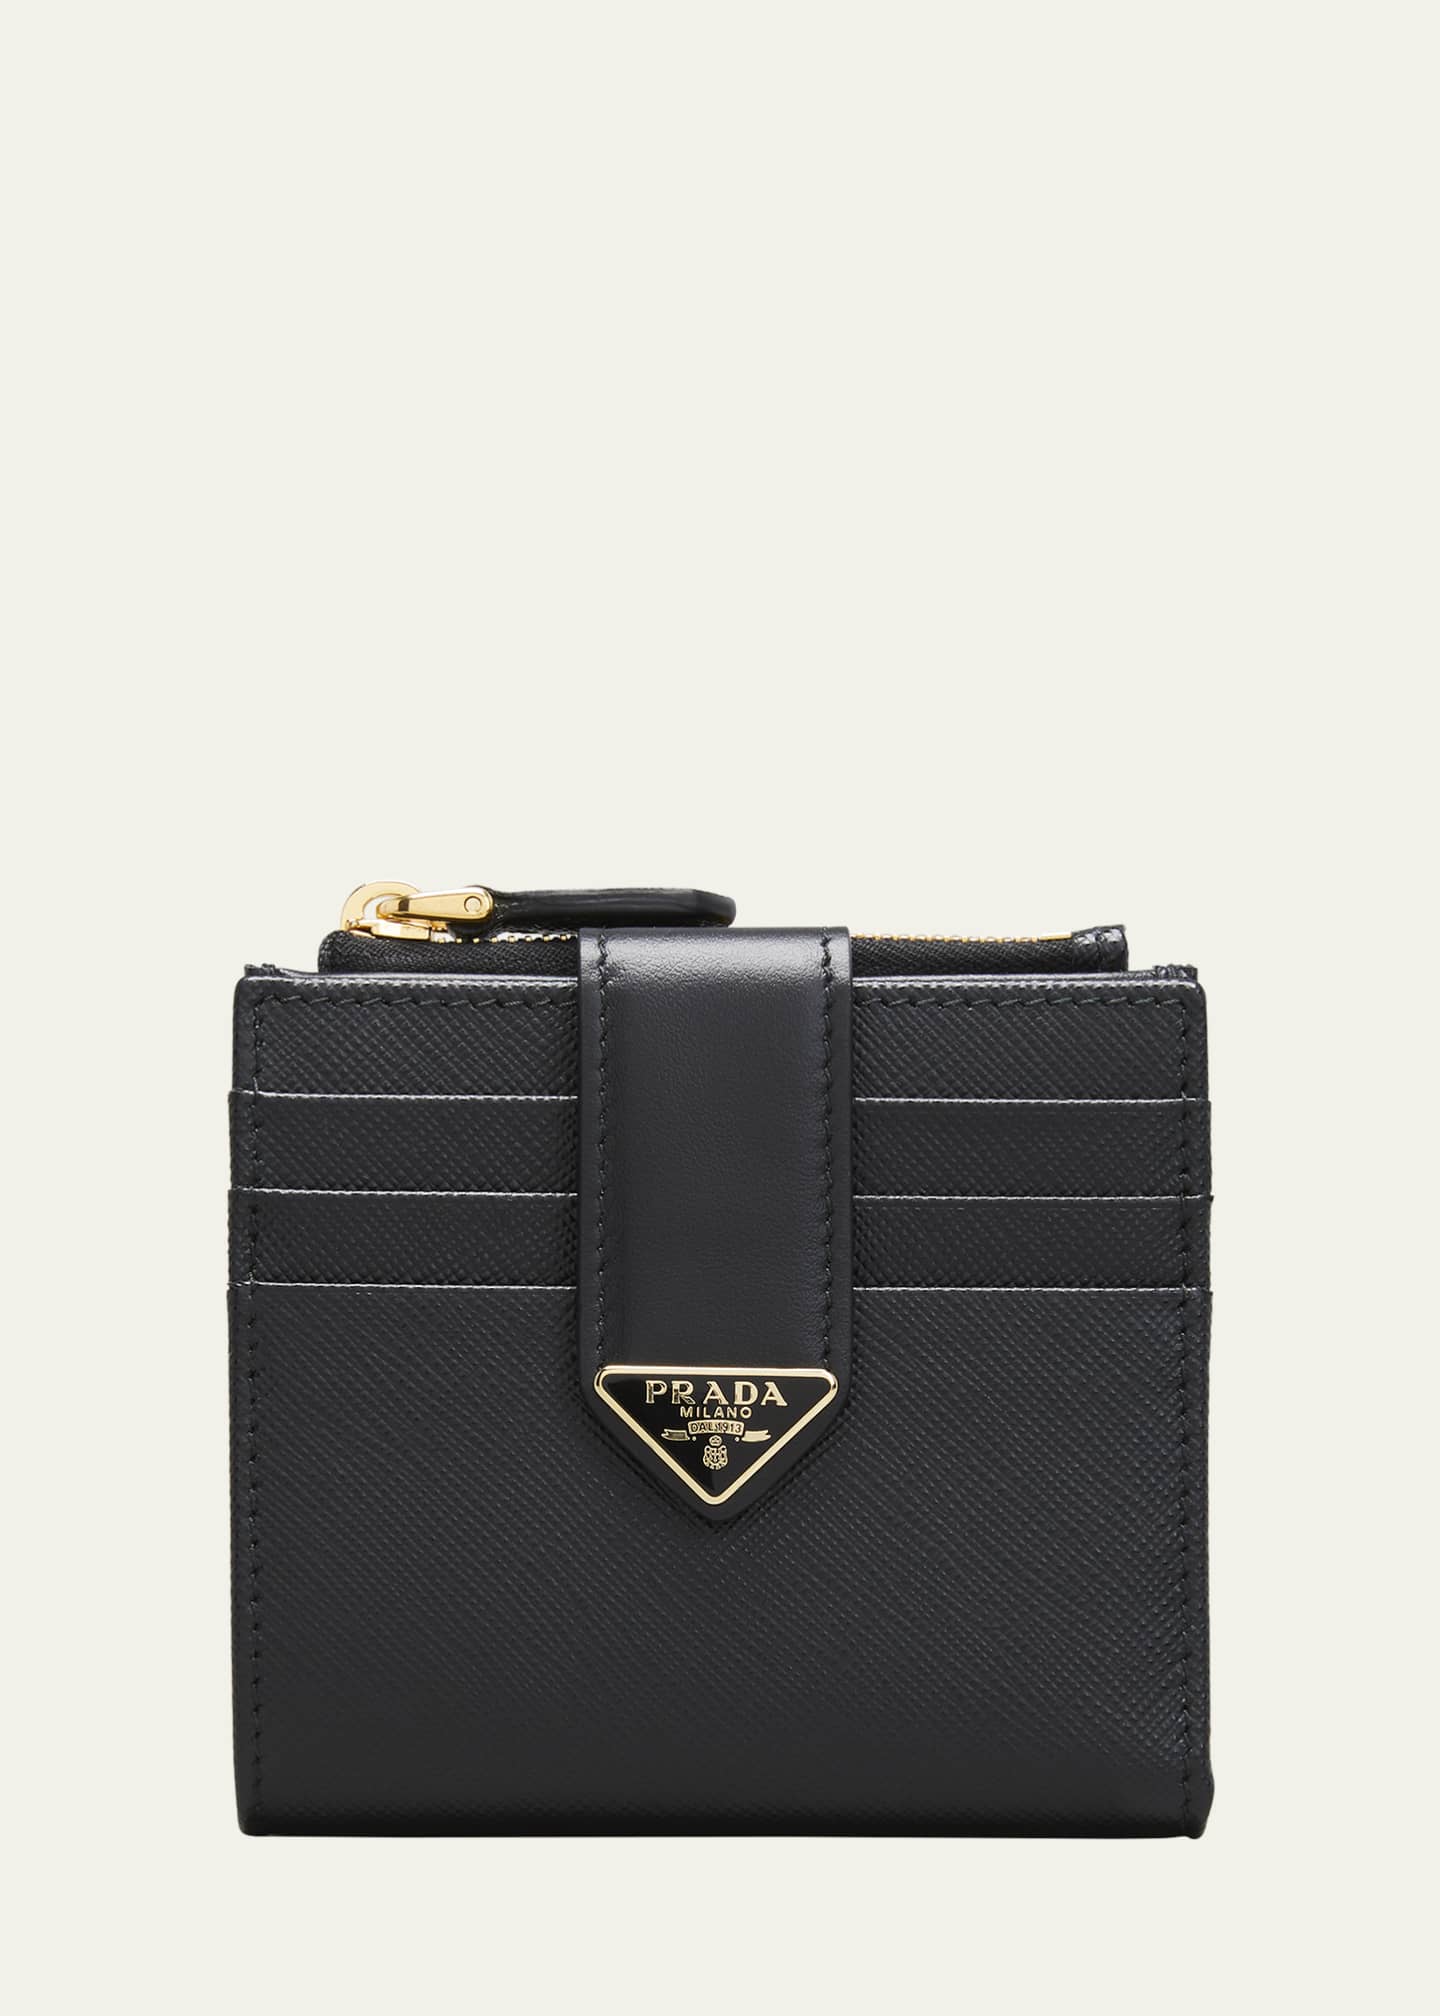 Prada Women's Small Saffiano Leather Wallet